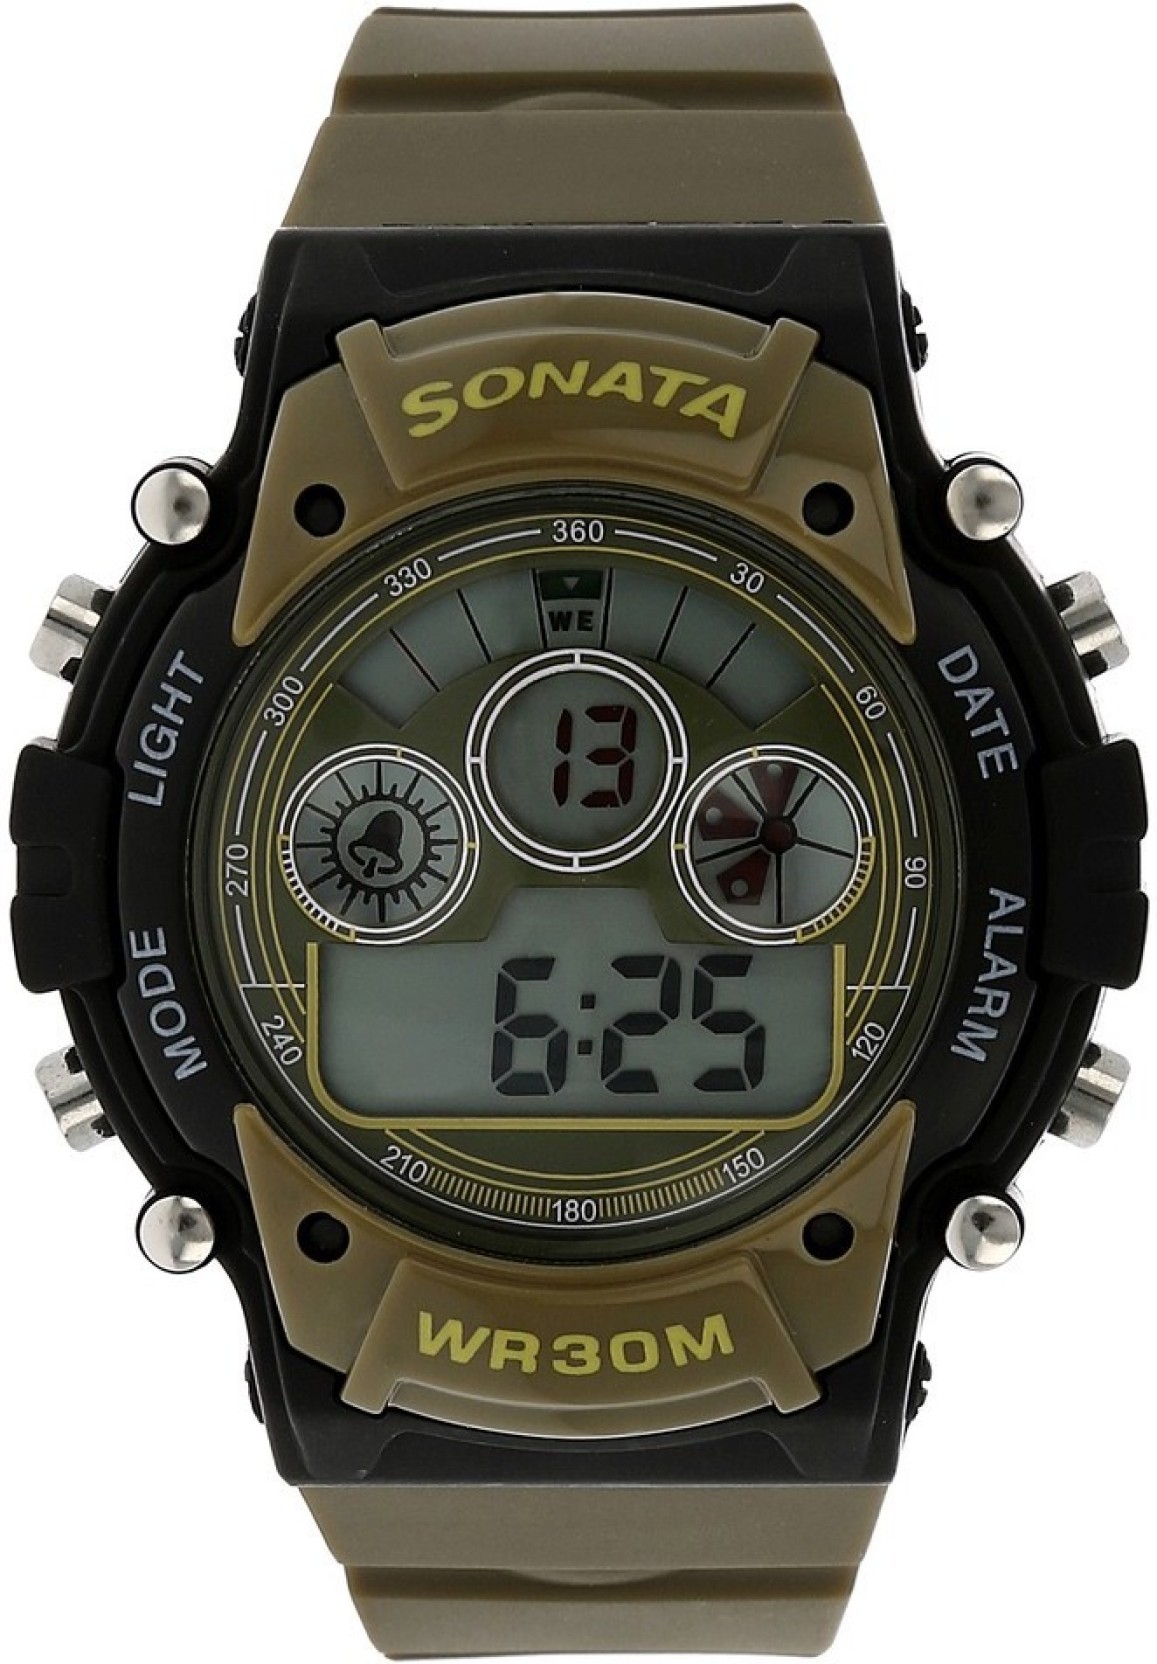 Sonata super fibre digital watch user manual pdf